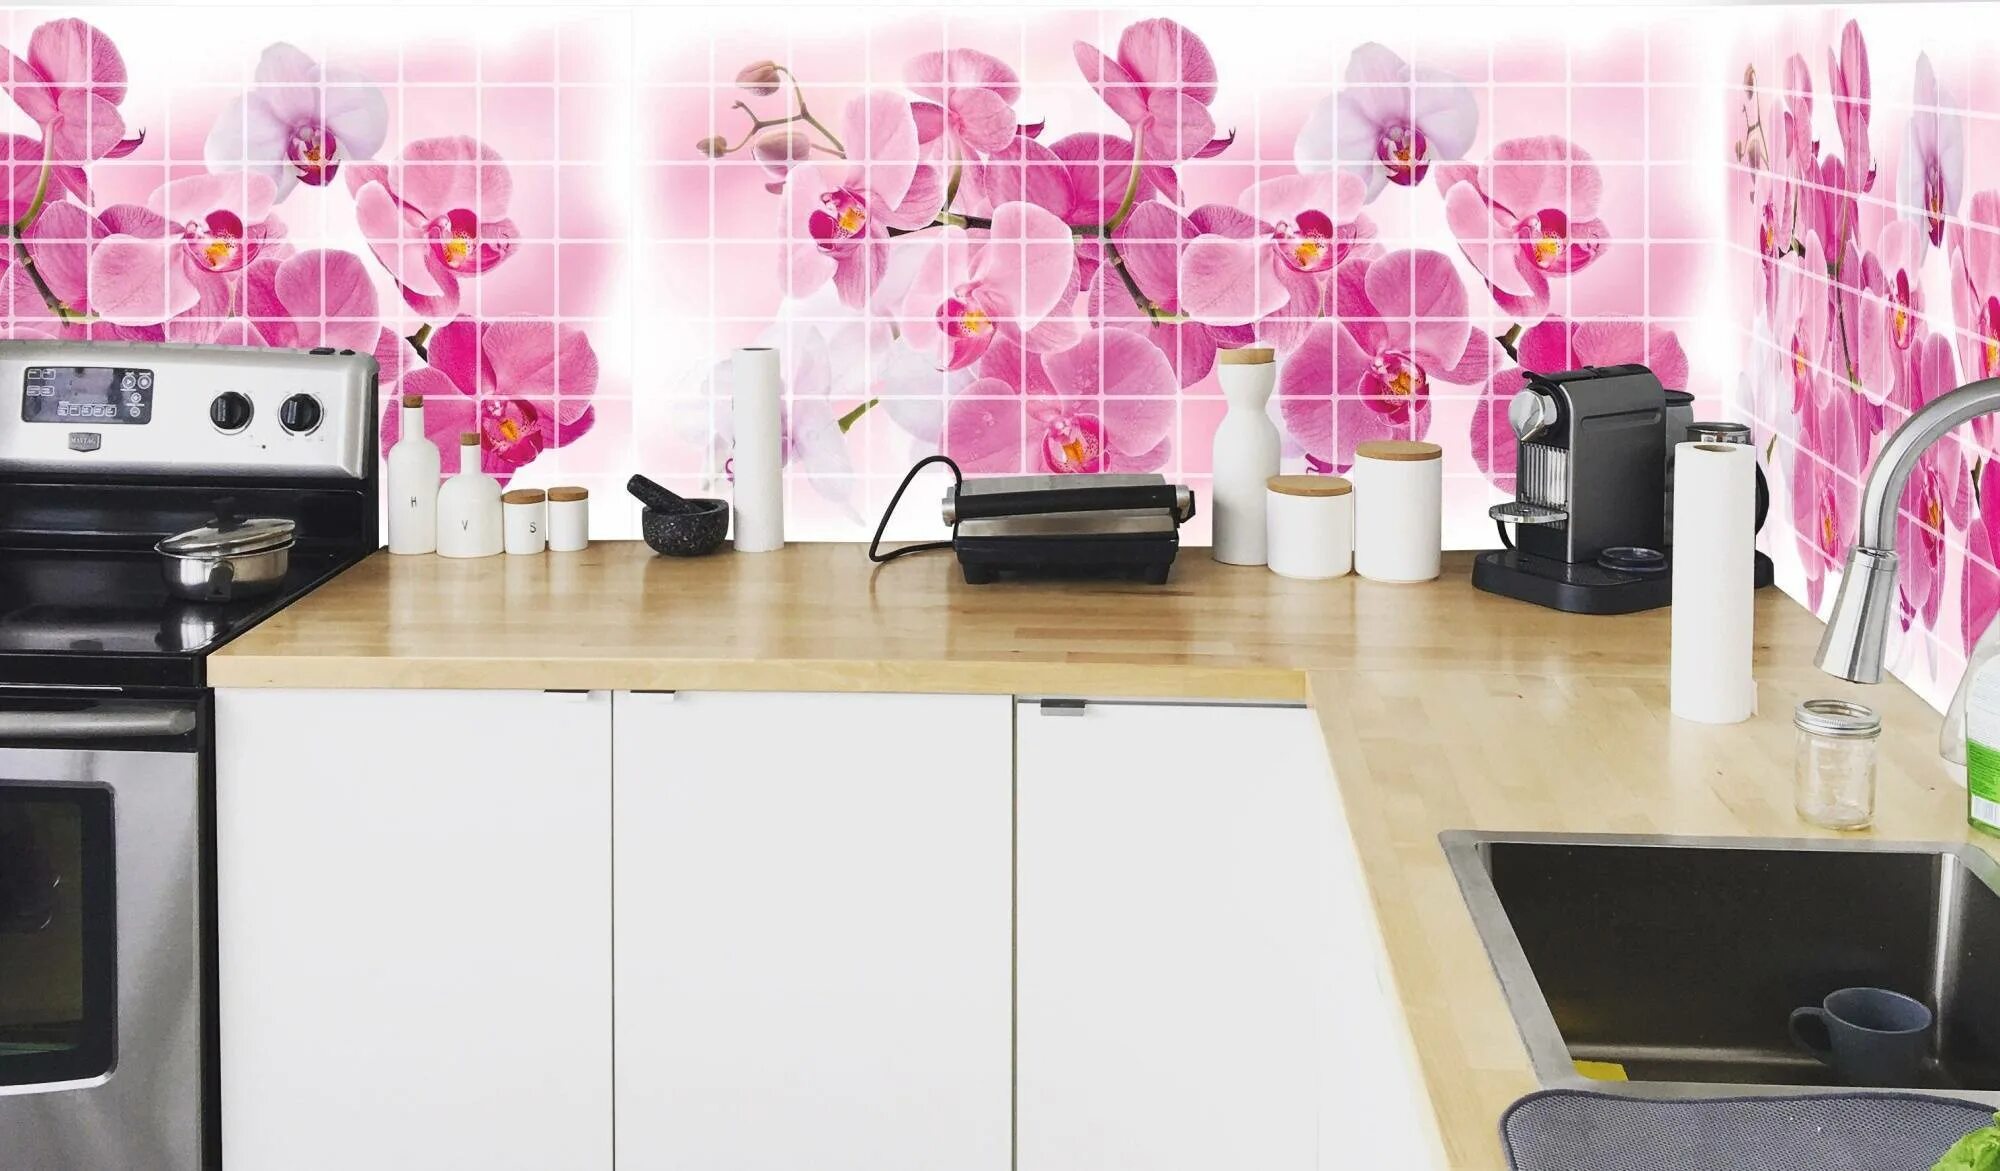 Панель ПВХ мозаика Орхидея Розея. Панель ПВХ мозаика Орхидея Розея 480*955*0,2мм. Пластиковые панели для кухни. Пластиковые стеновые панели для кухни. Пвх панели для фартука кухни